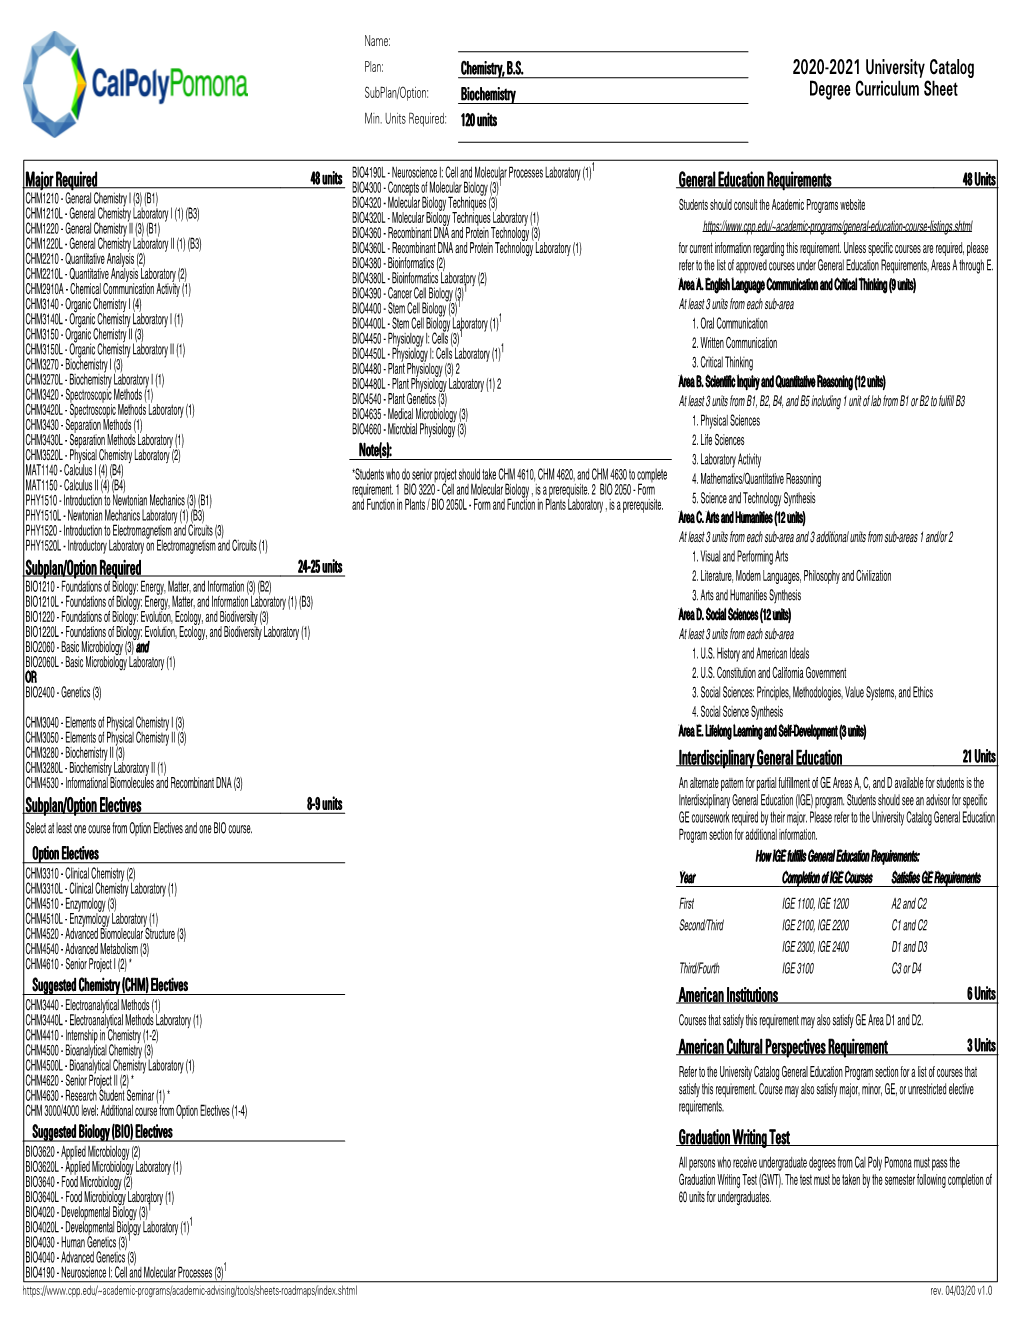 Curriculum Sheet for Biochemistry Option